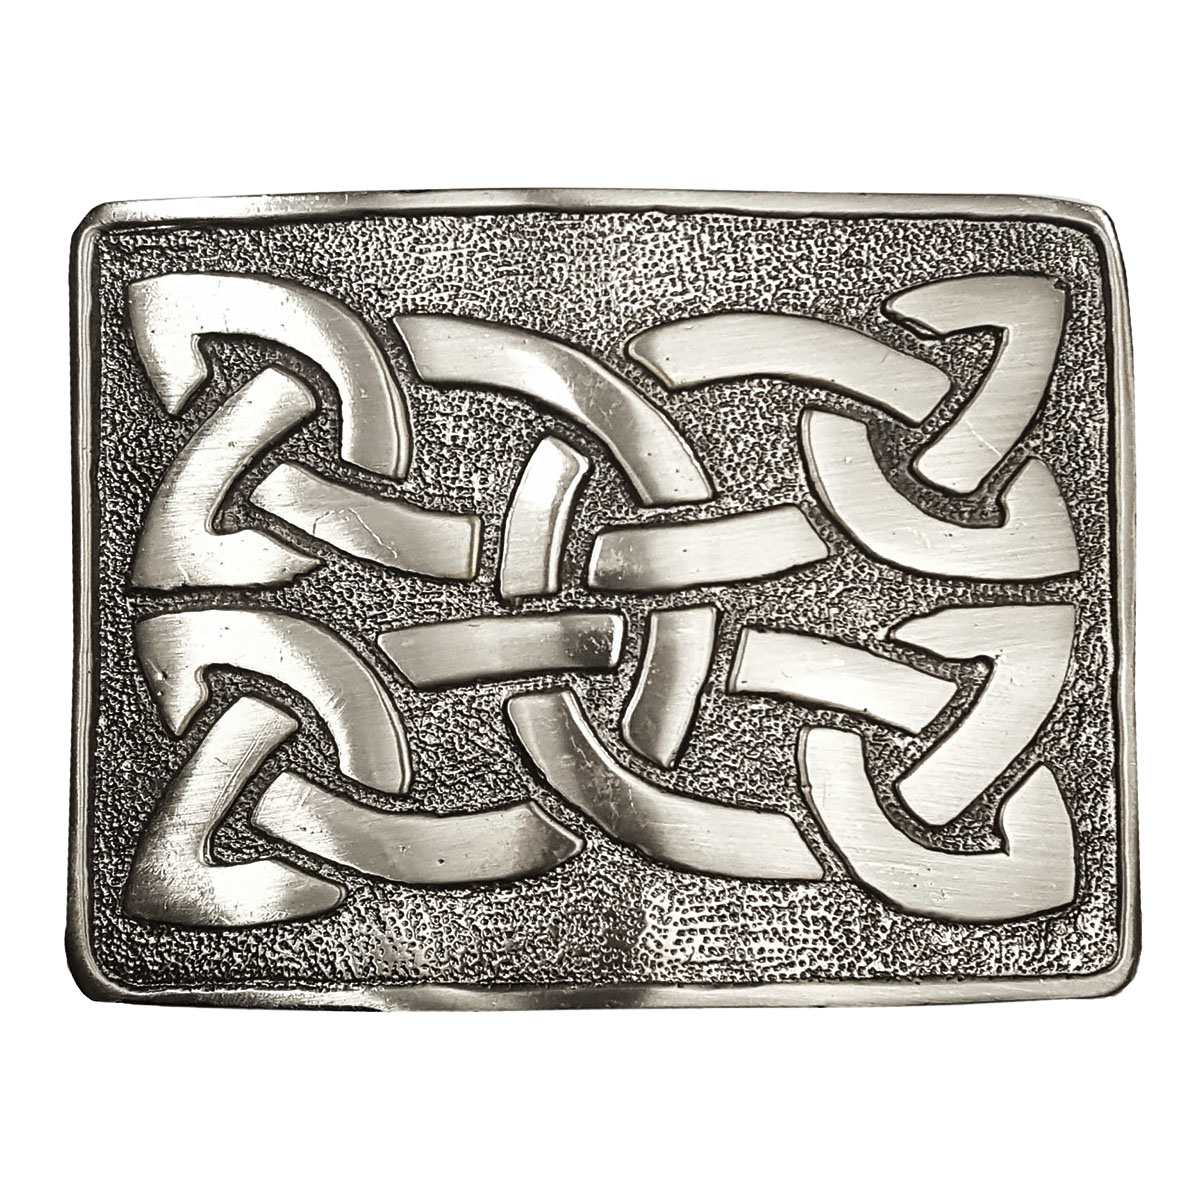 An Celtic Weave Antiqued Kilt Belt Buckle with an intricate design.